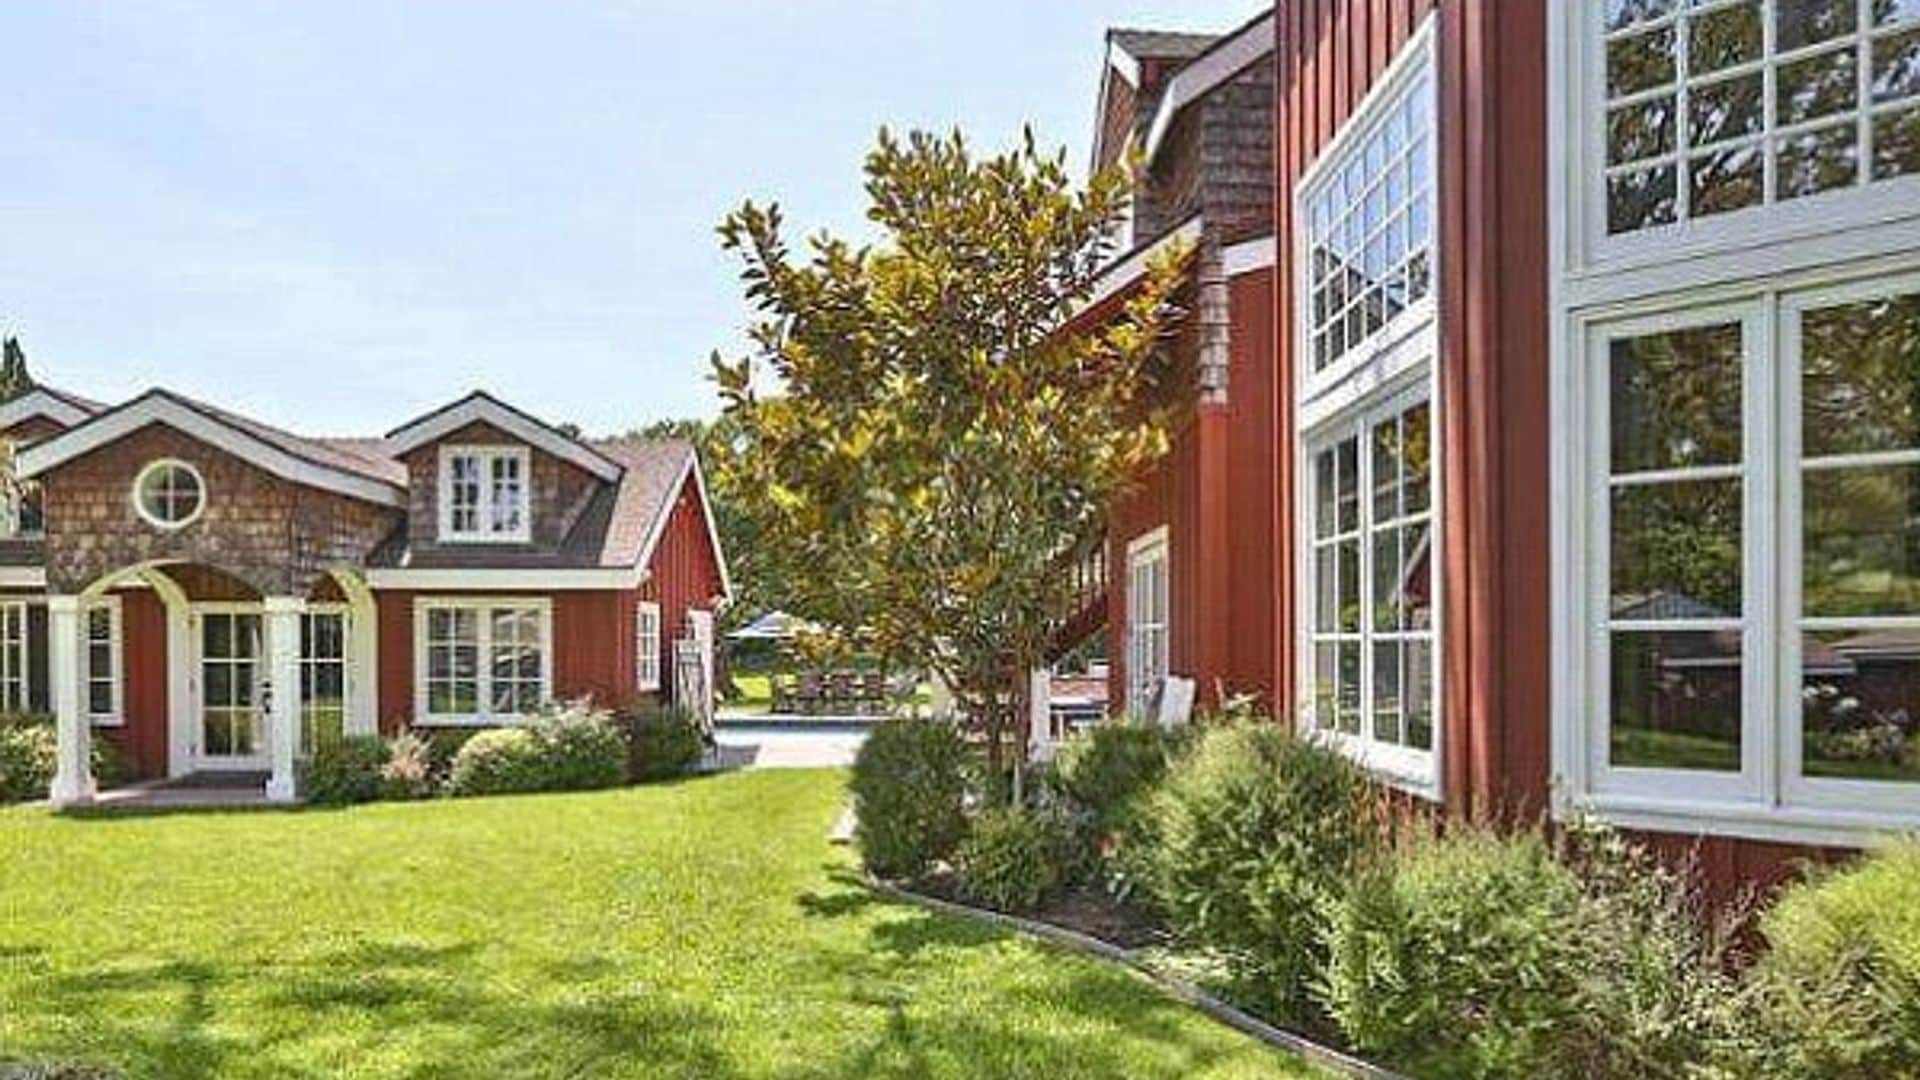 ​SOLD: Robert F. Kennedy Jr. and Cheryl Hines buy a $5 million Malibu home